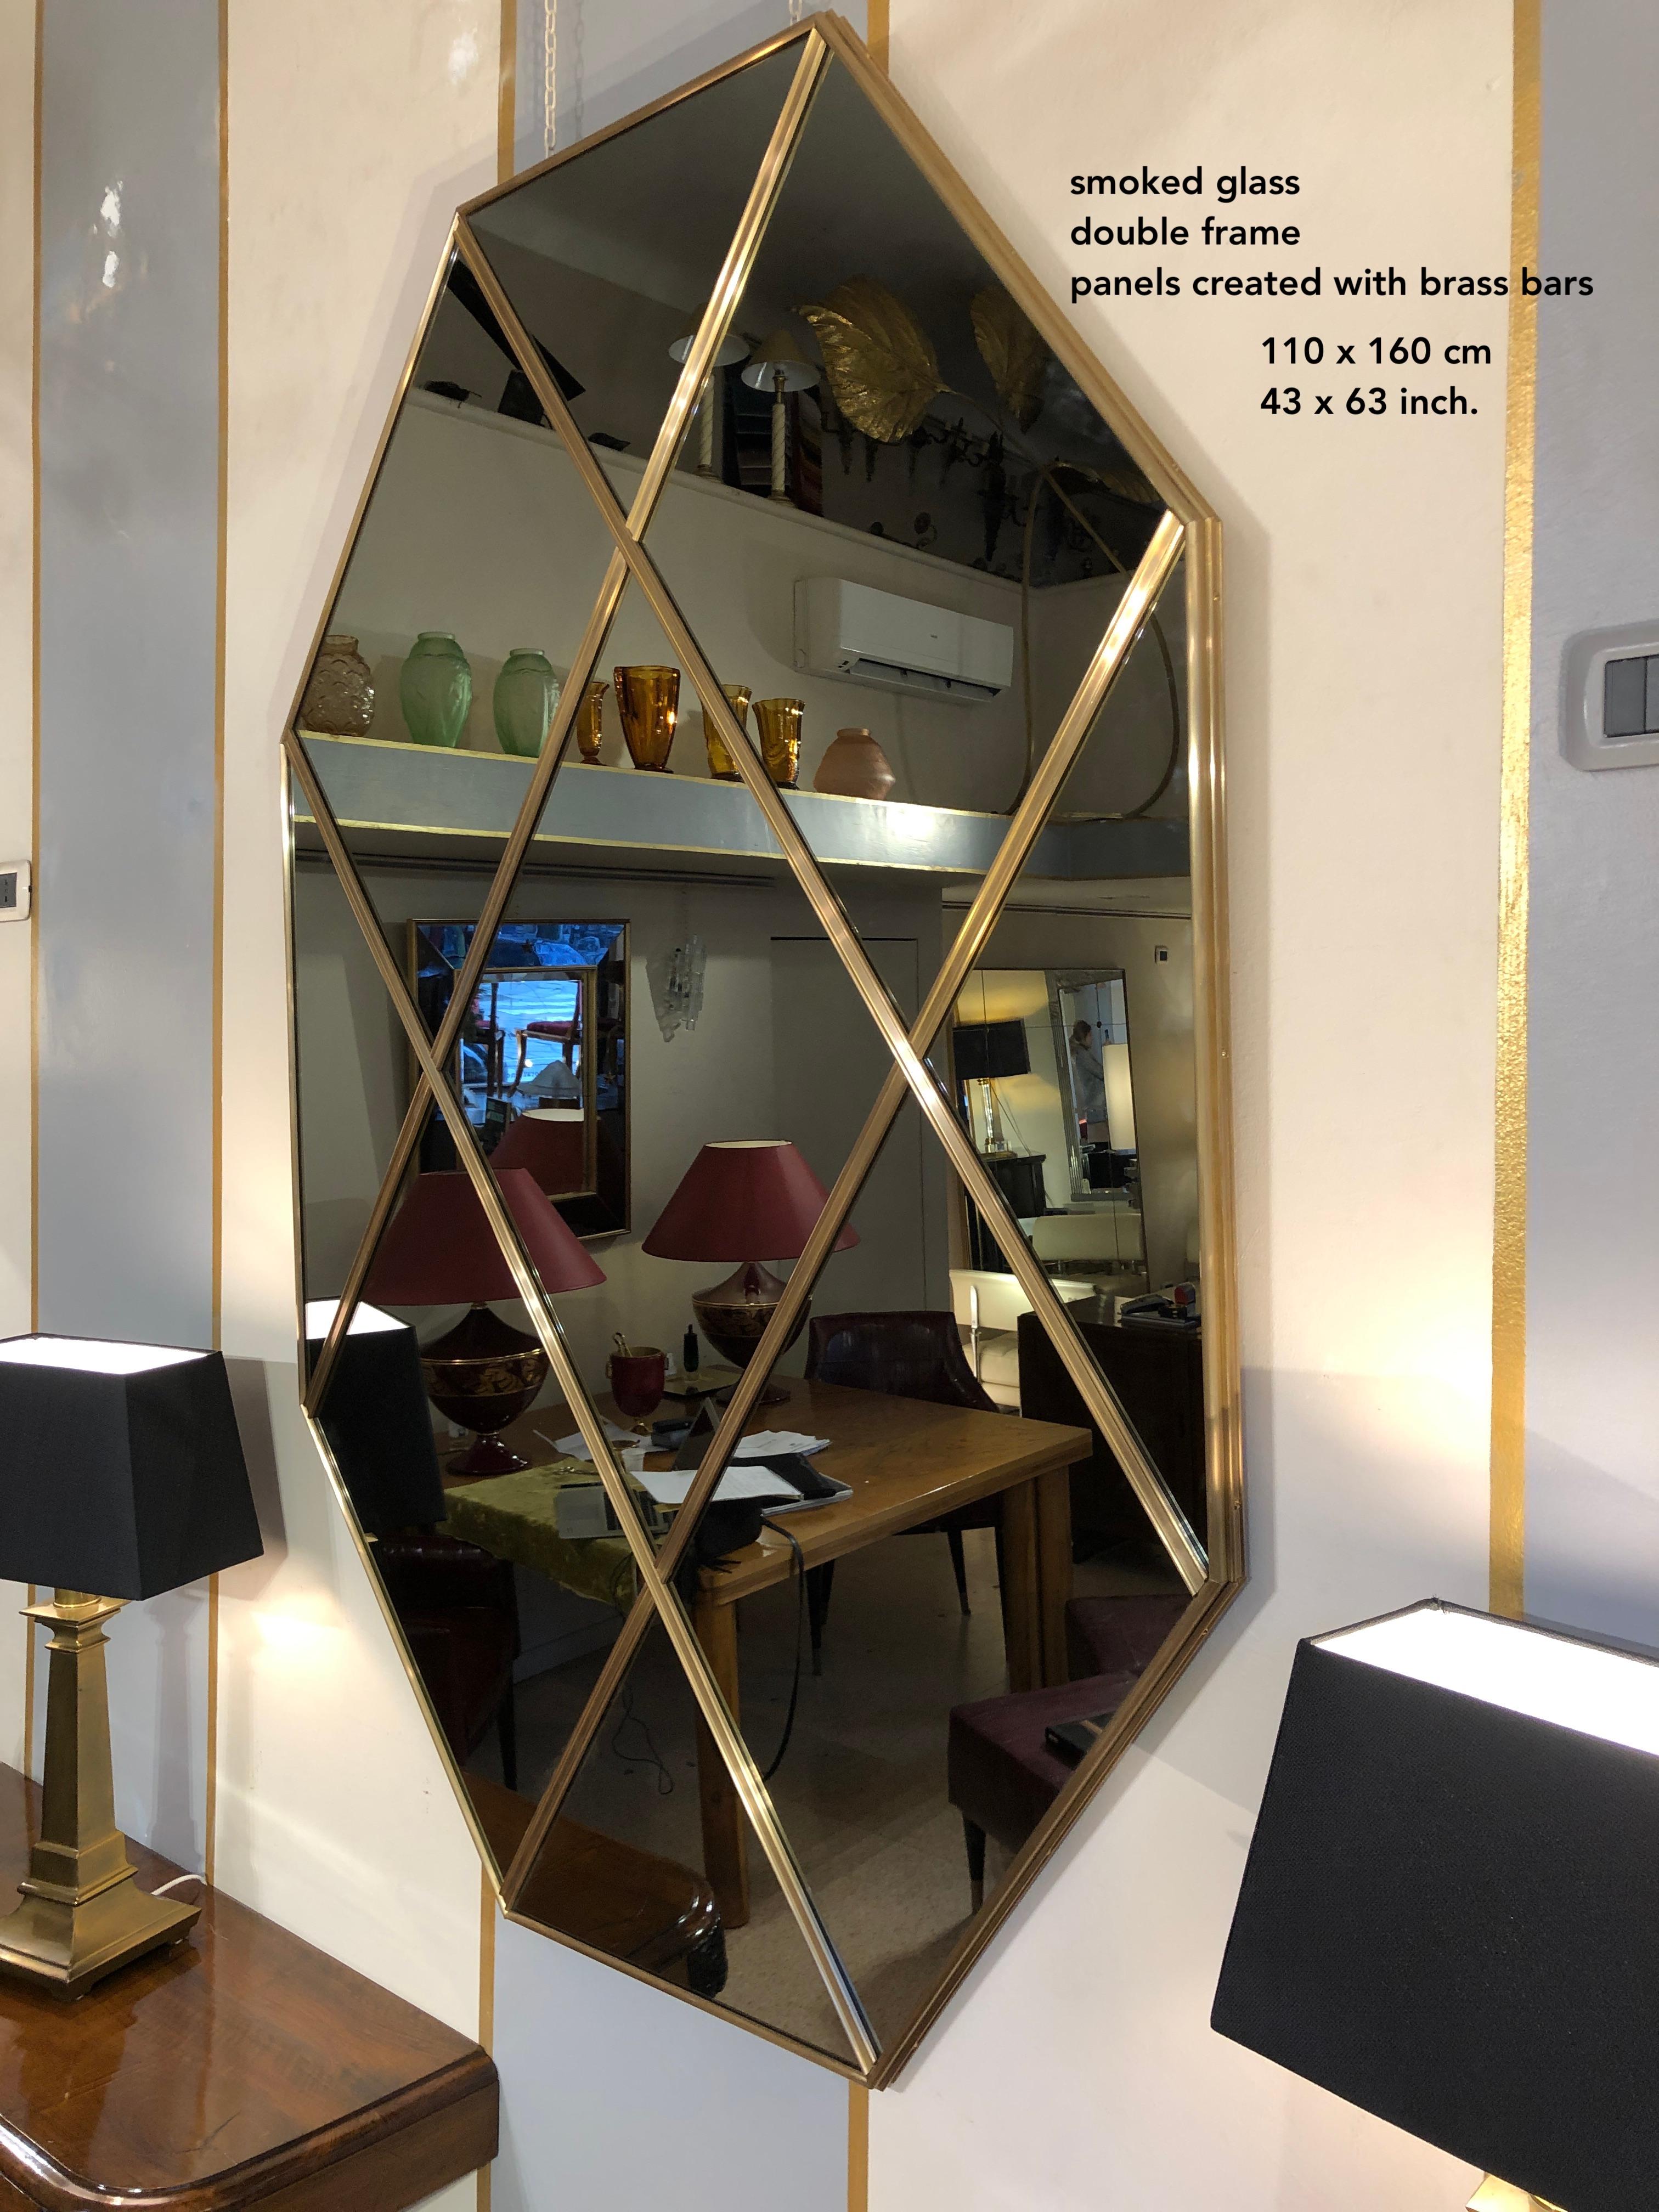 Laiton Contemporary Octagonal Art Deco Style Brass Paneled Smoked Mirror 120 X 90 CM en vente